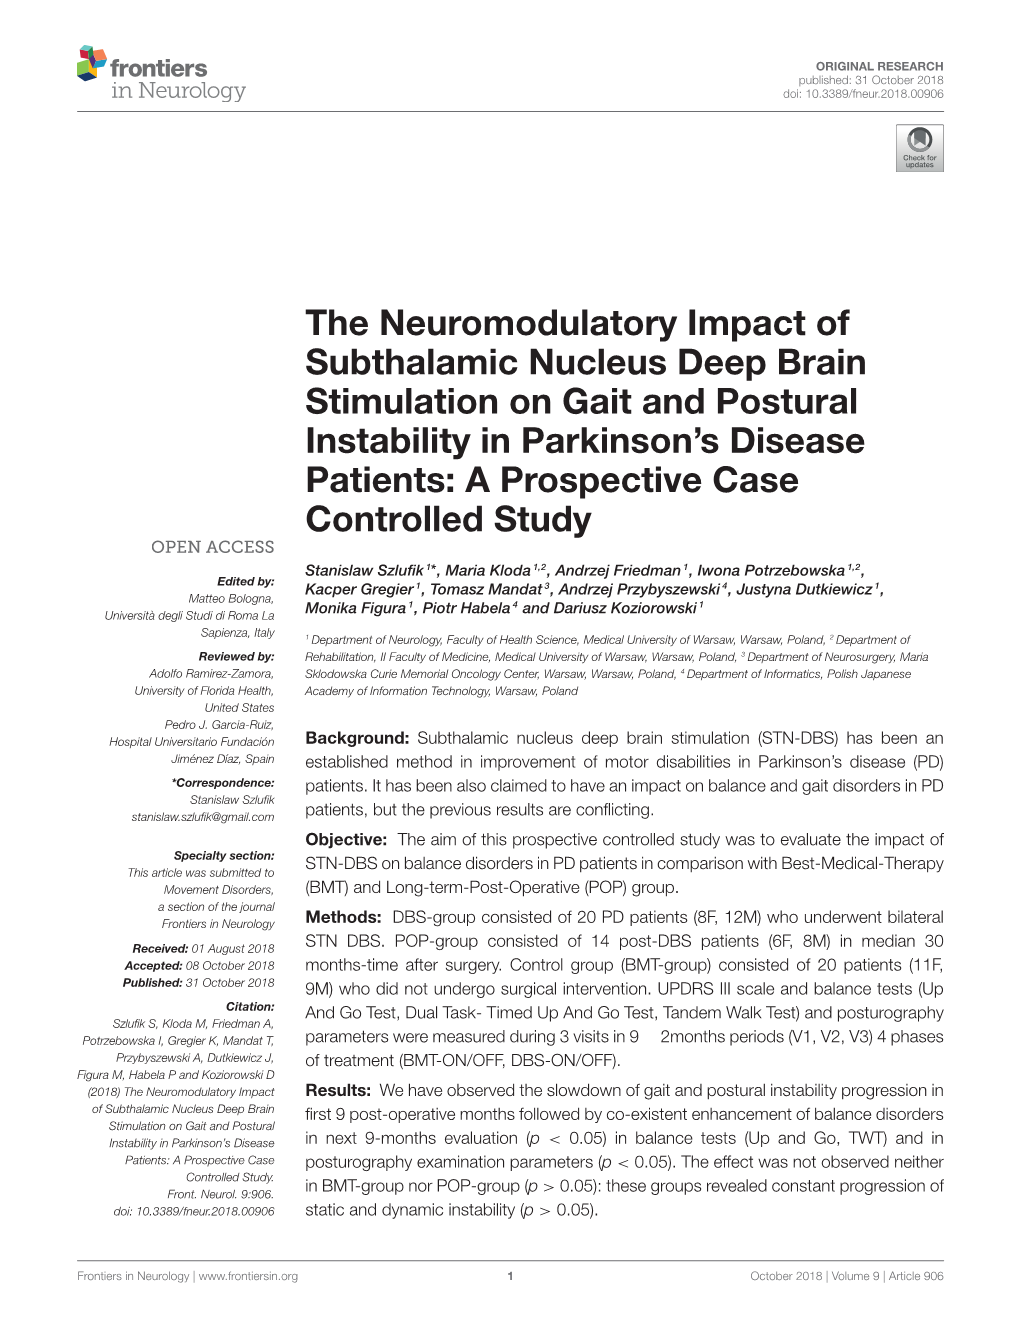 The Neuromodulatory Impact of Subthalamic Nucleus Deep Brain